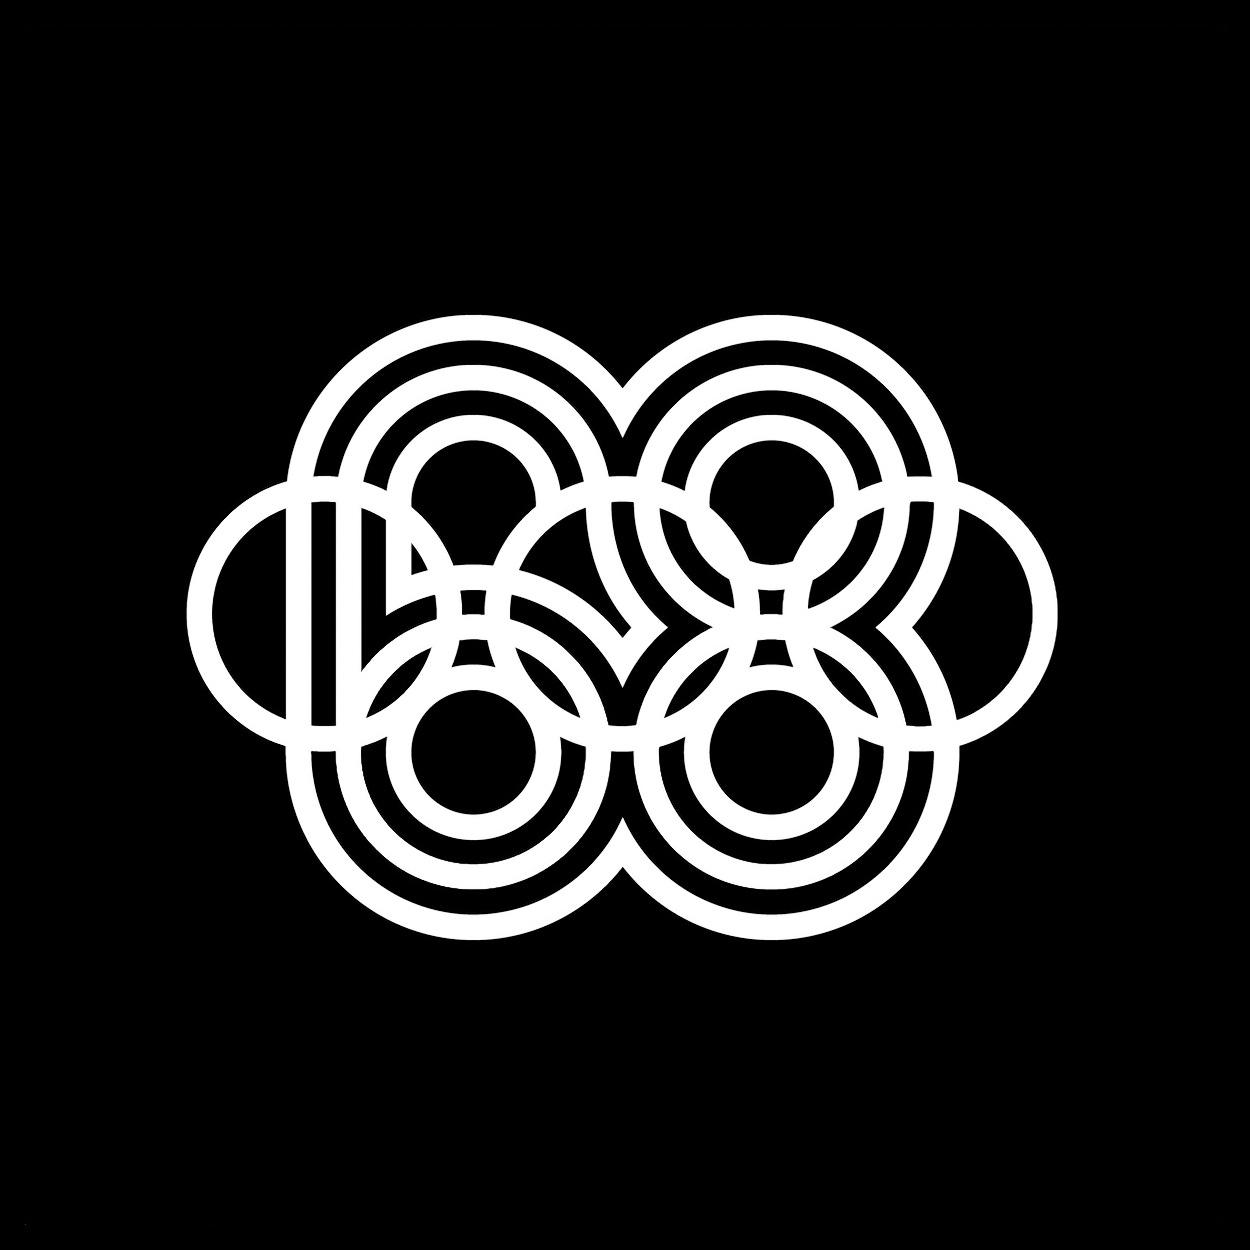 Mexico 1968 logo design by Lance Wyman